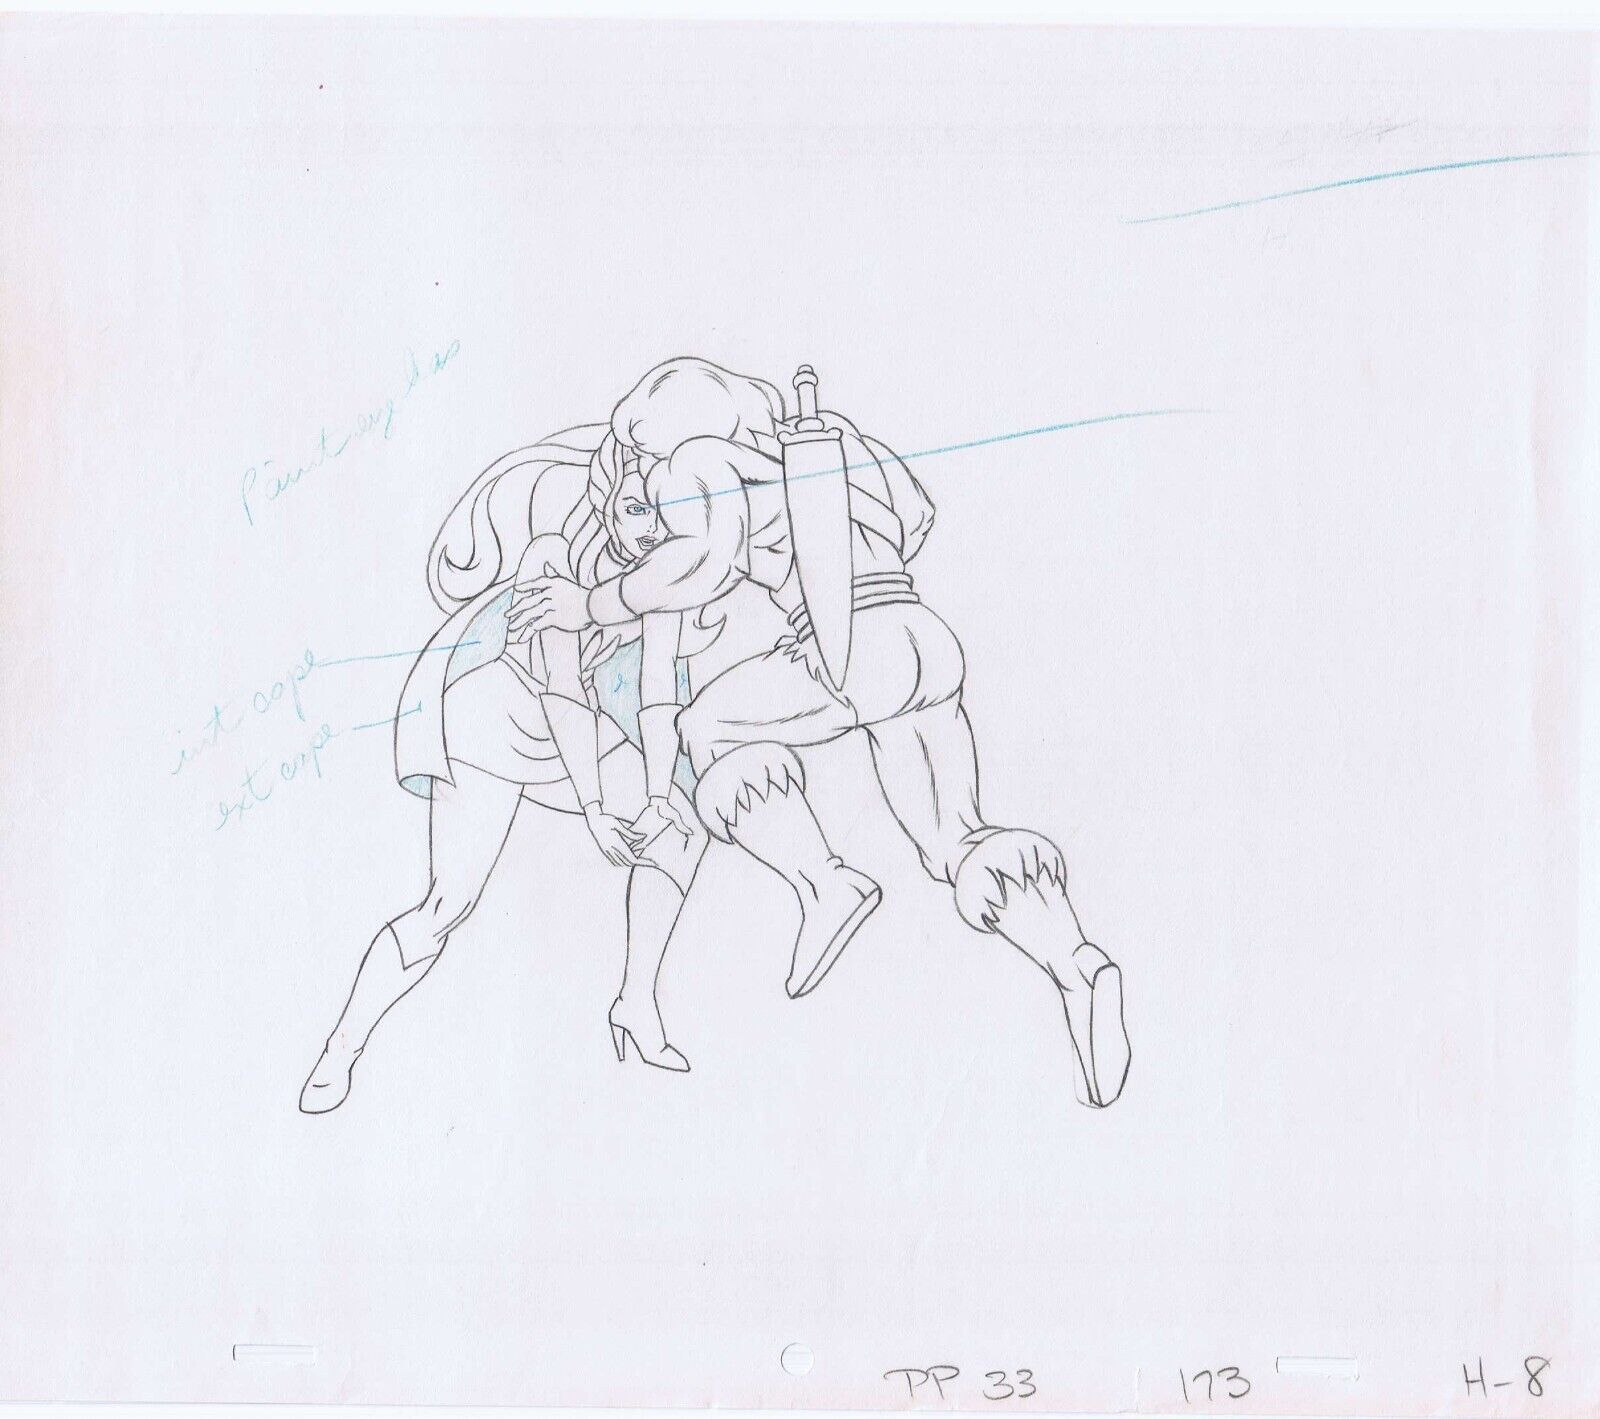 She-Ra He-Man 1985 Original Art w/COA Animation Production Pencils PP 33 173 H-8